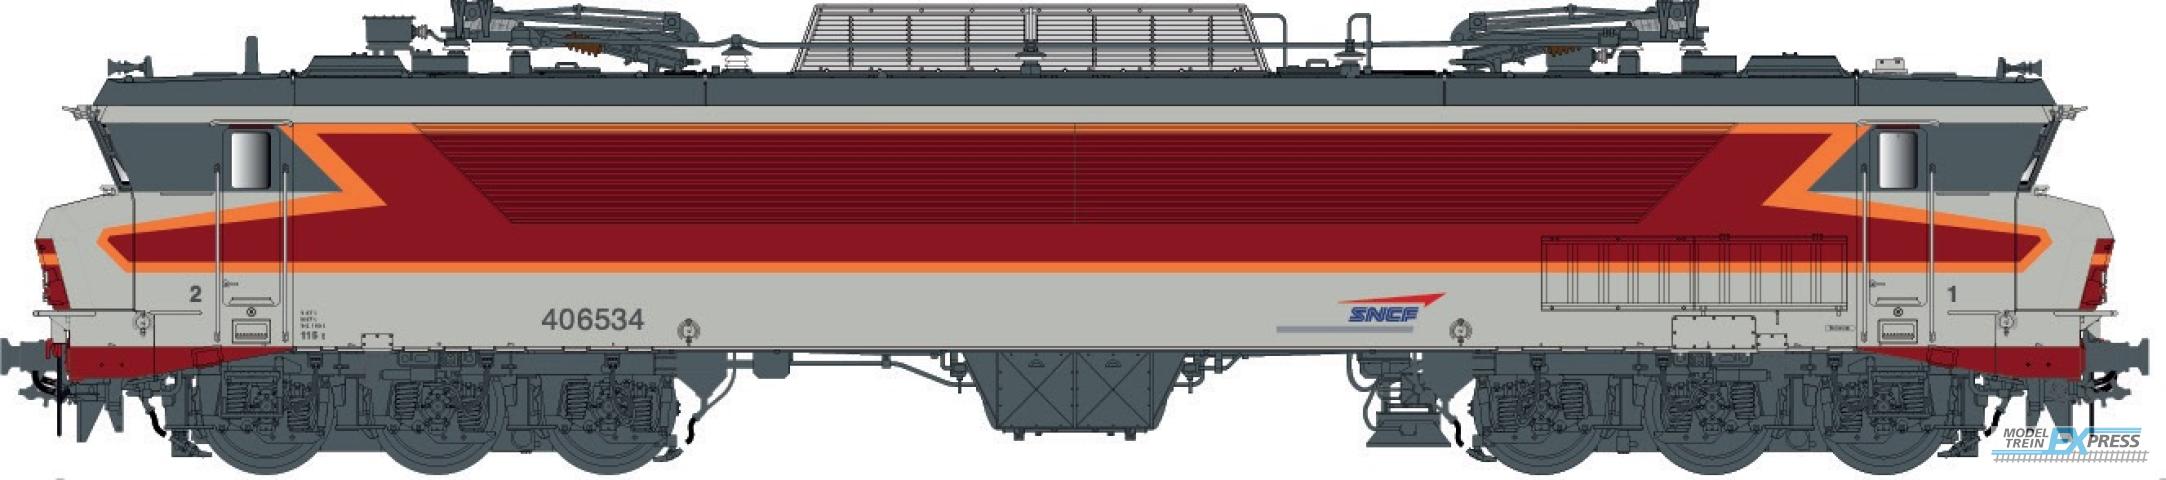 LS Models 10330S CC 6534, grey/red/orange, livery ARZENS, logo cap,Vénissieux depot  /  Ep. V  /  SNCF  /  HO  /  DC SOUND  /  1 P.